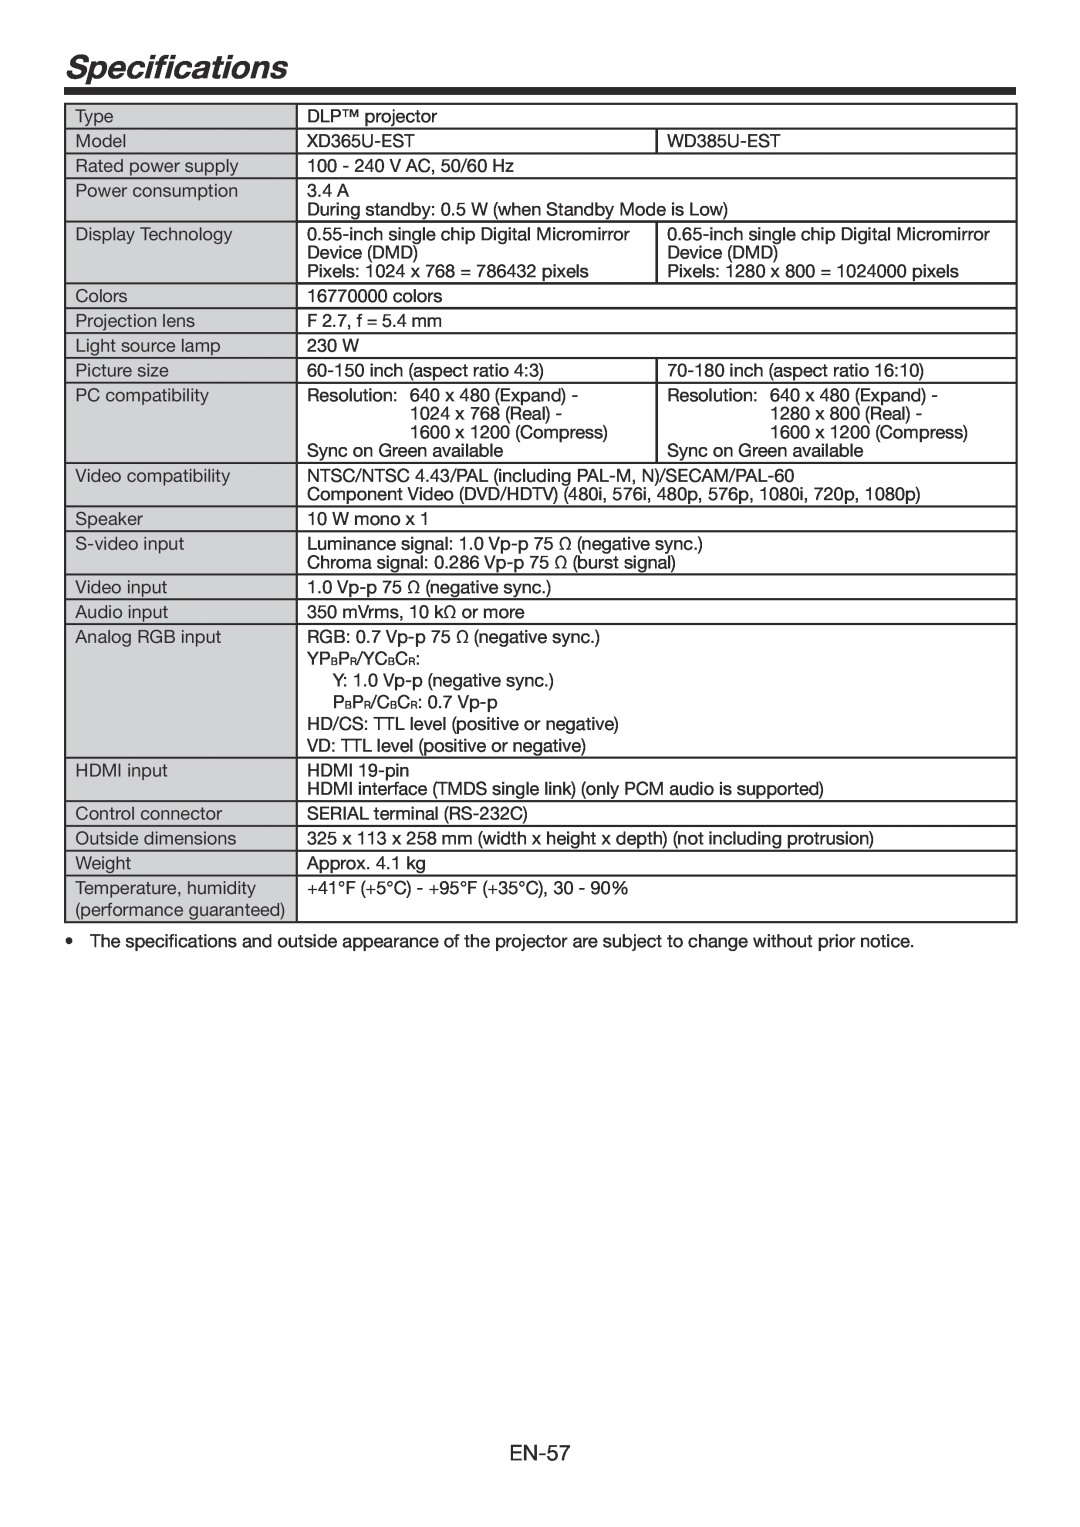 Mitsubishi Electronics WD385U-EST user manual Specifications, EN-57 